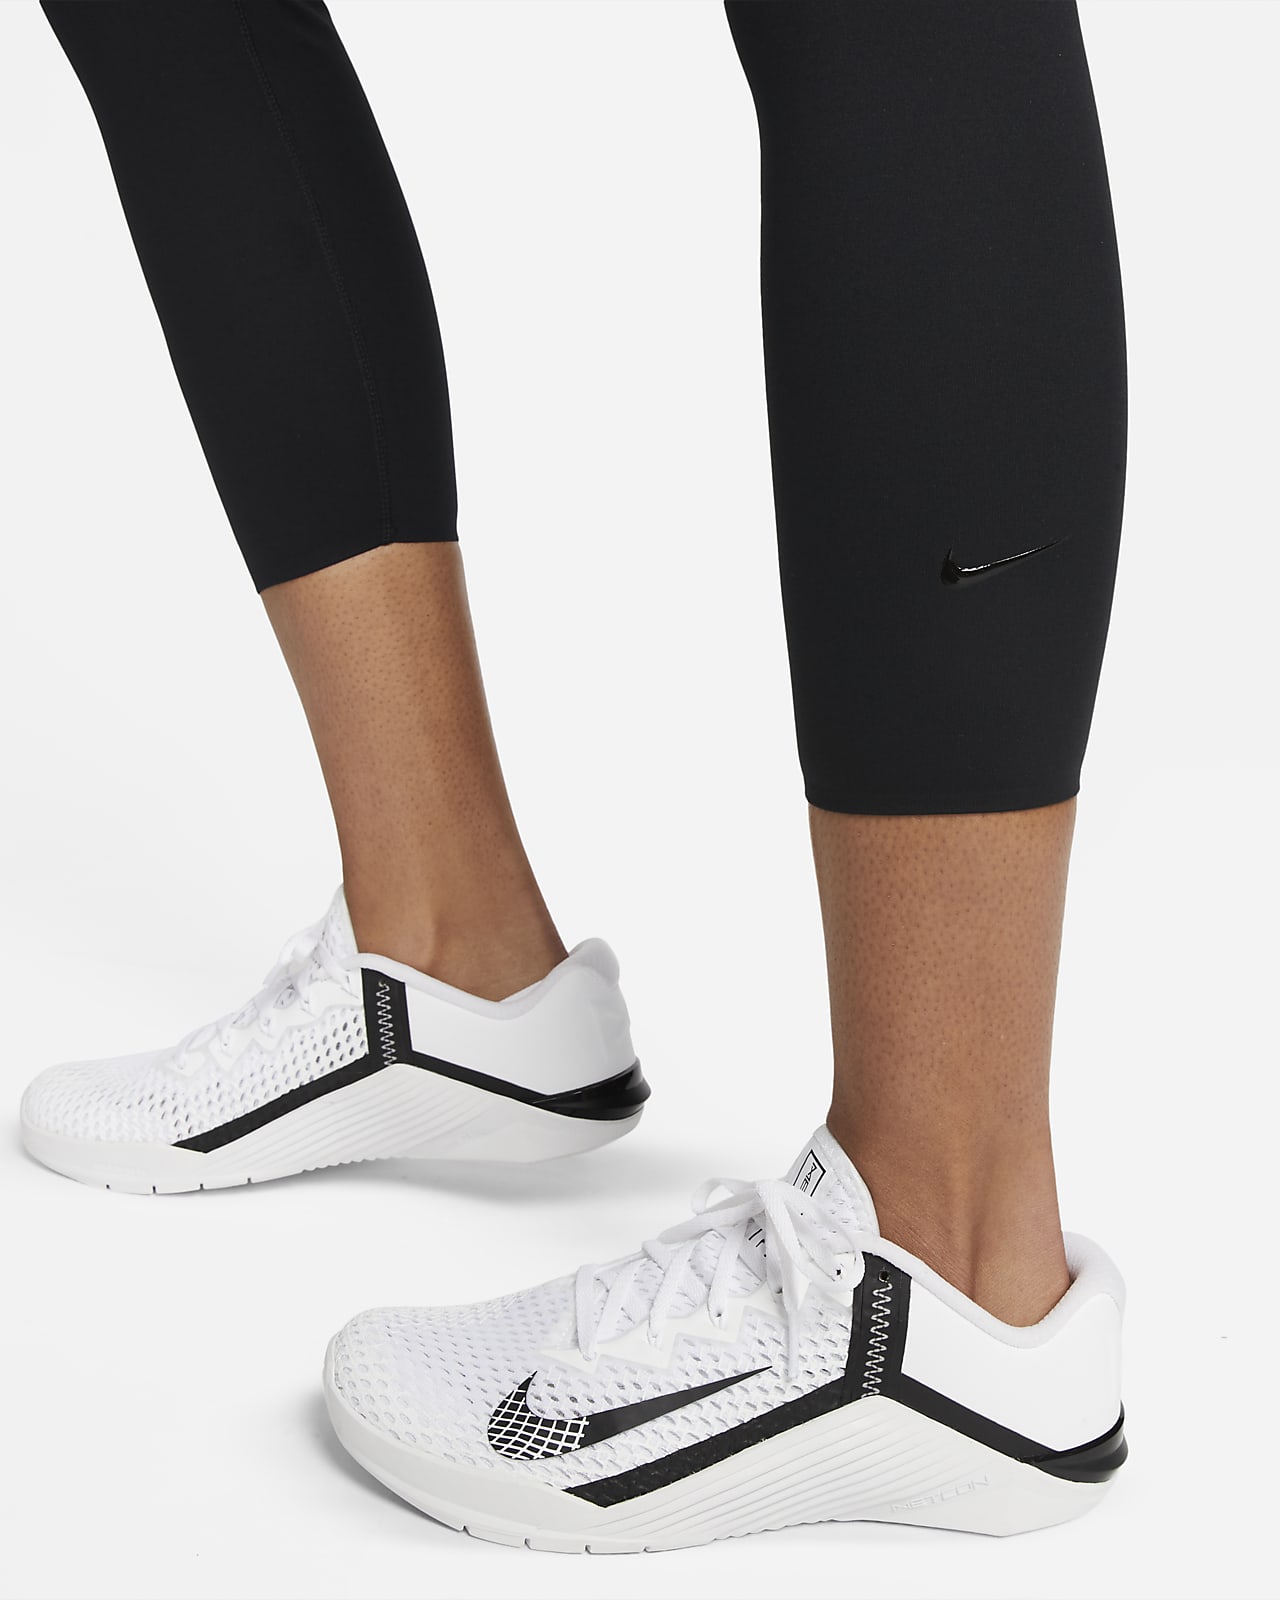 Nike One Luxe Women's Mid-Rise Crop Leggings.